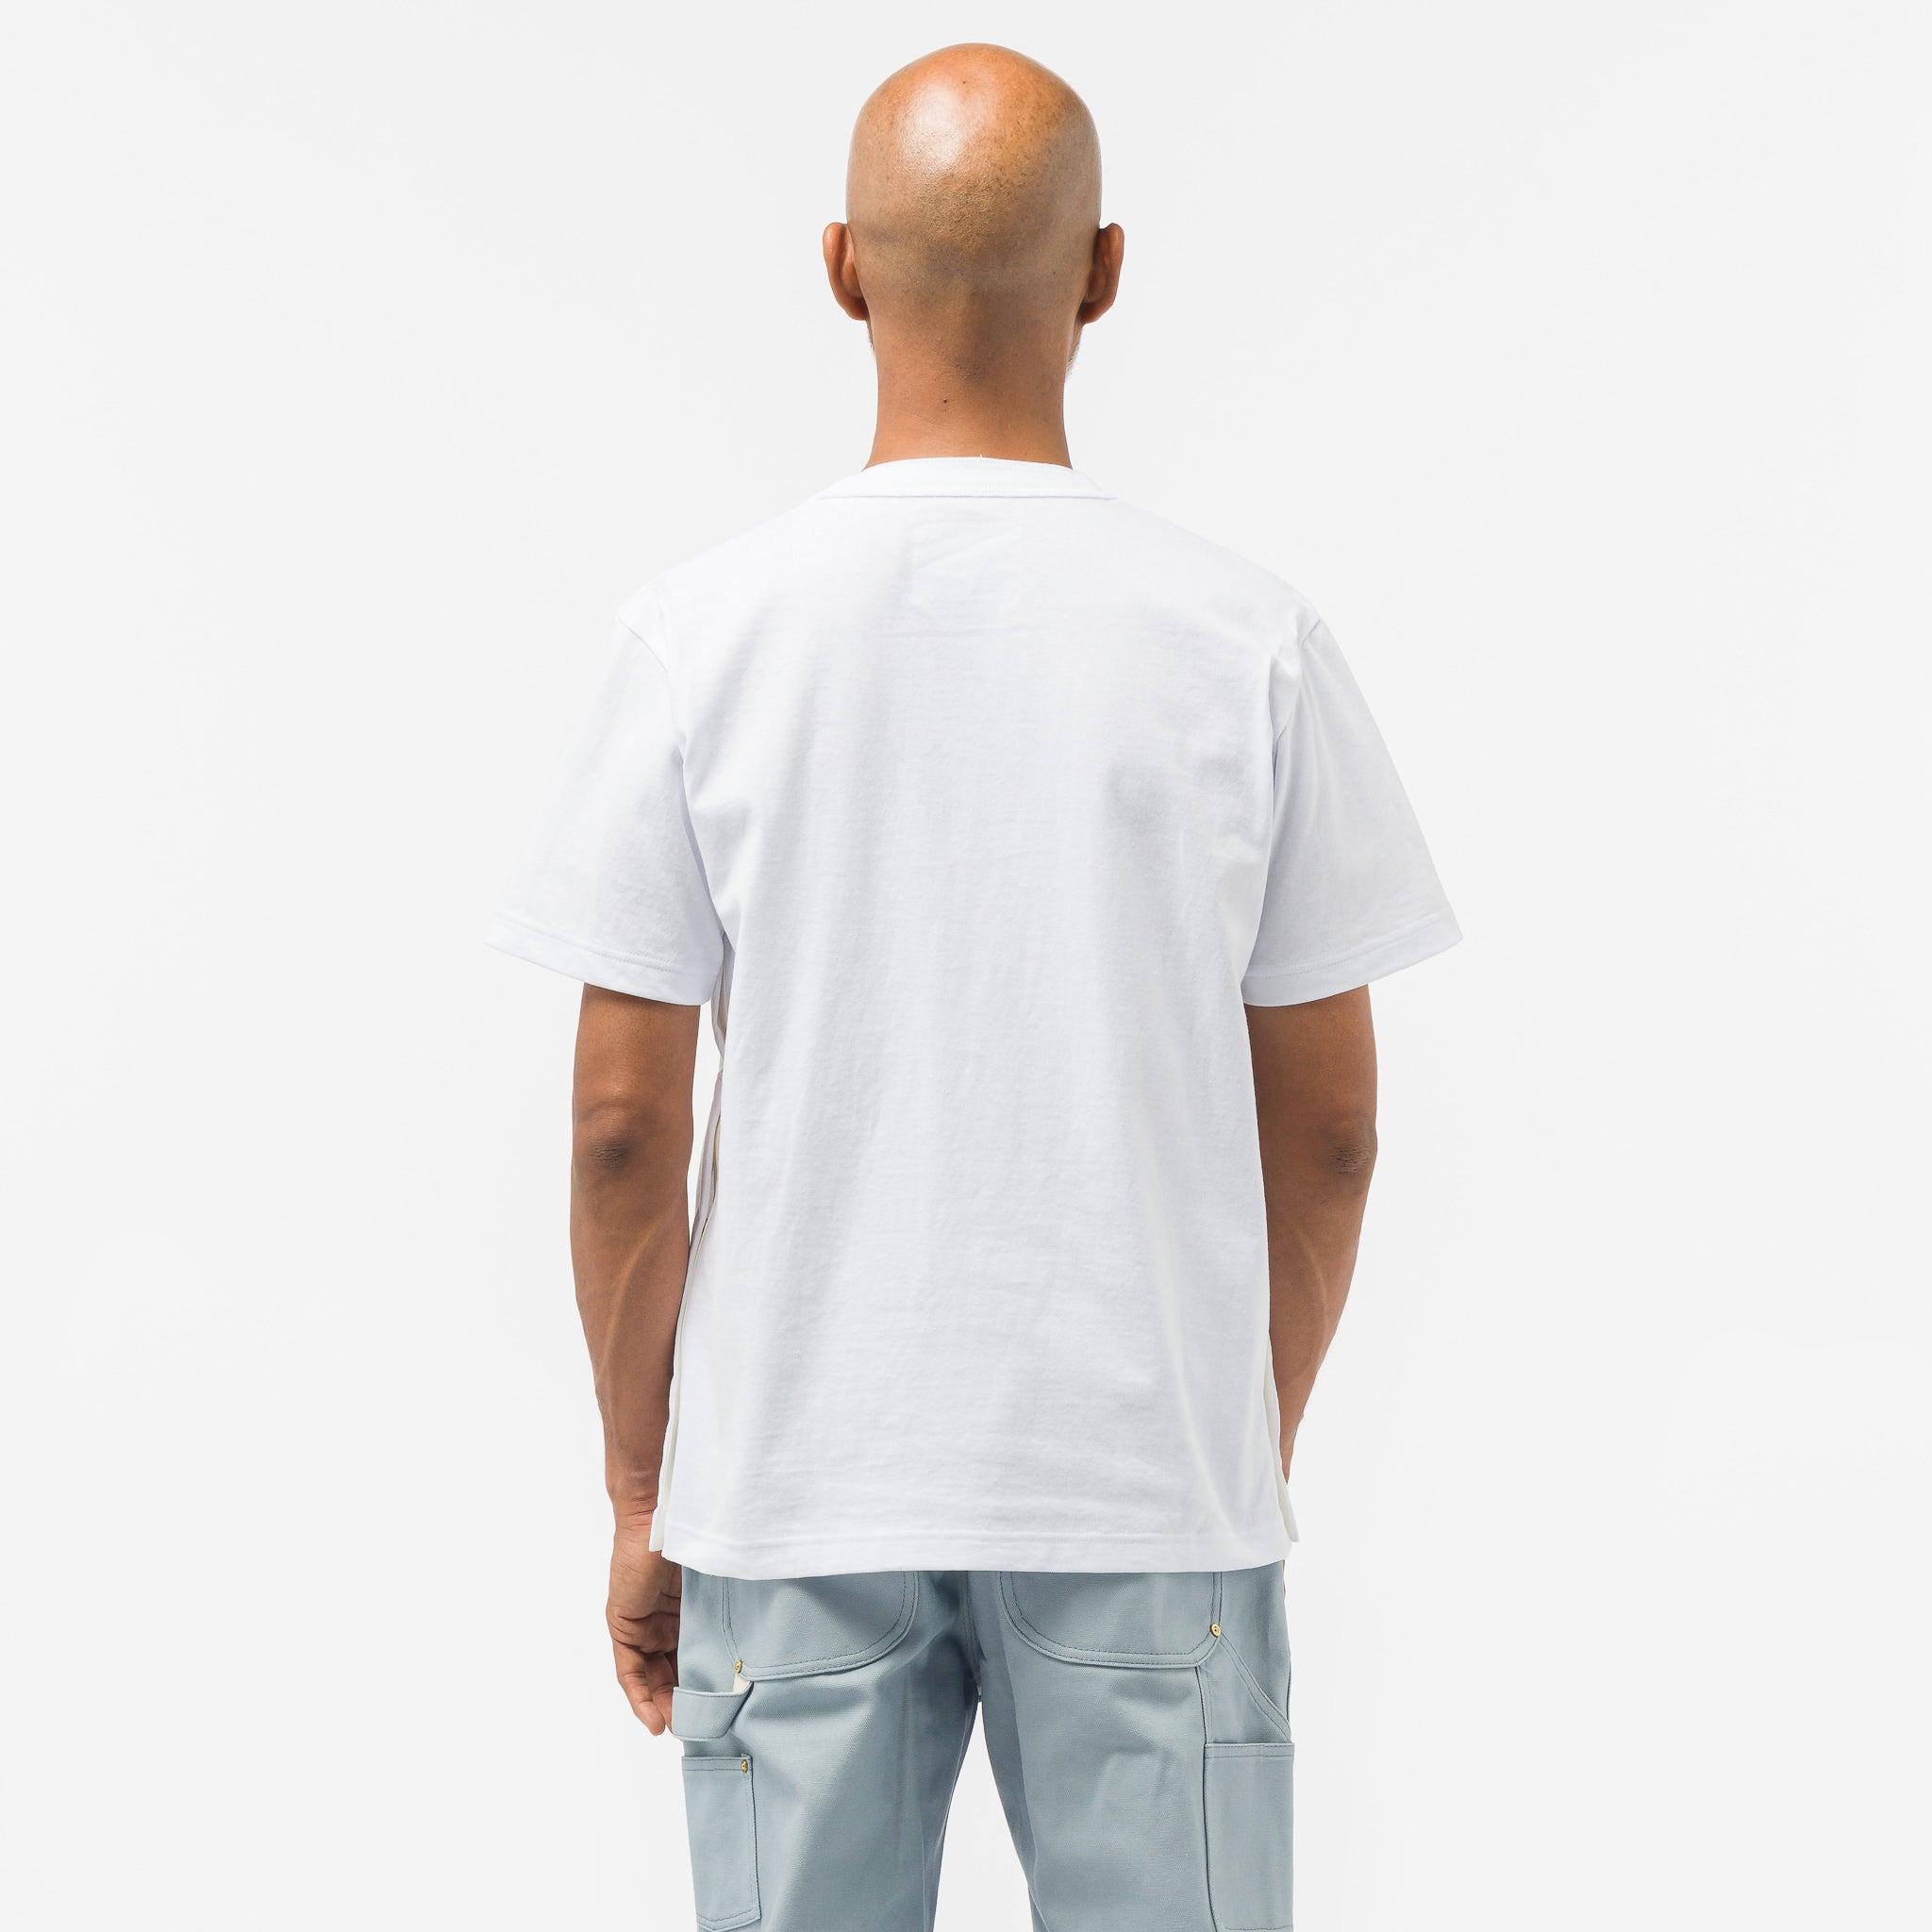 Sacai Carhartt Wip T-shirt in White for Men | Lyst